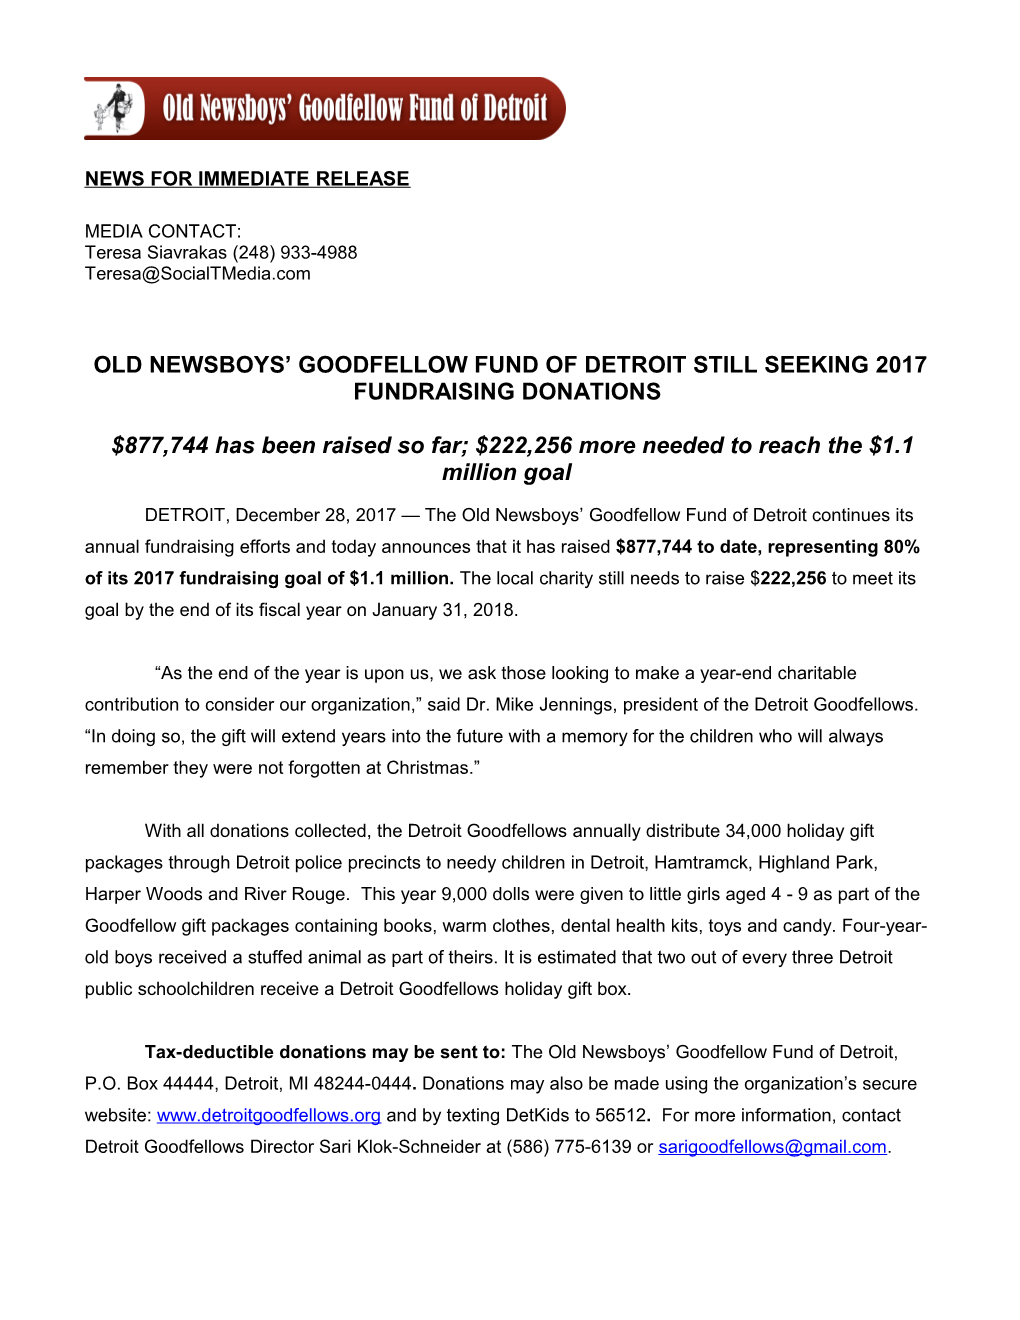 Old Newsboys Goodfellow Fund of Detroit Still Seeking 2017 Fundraising Donations